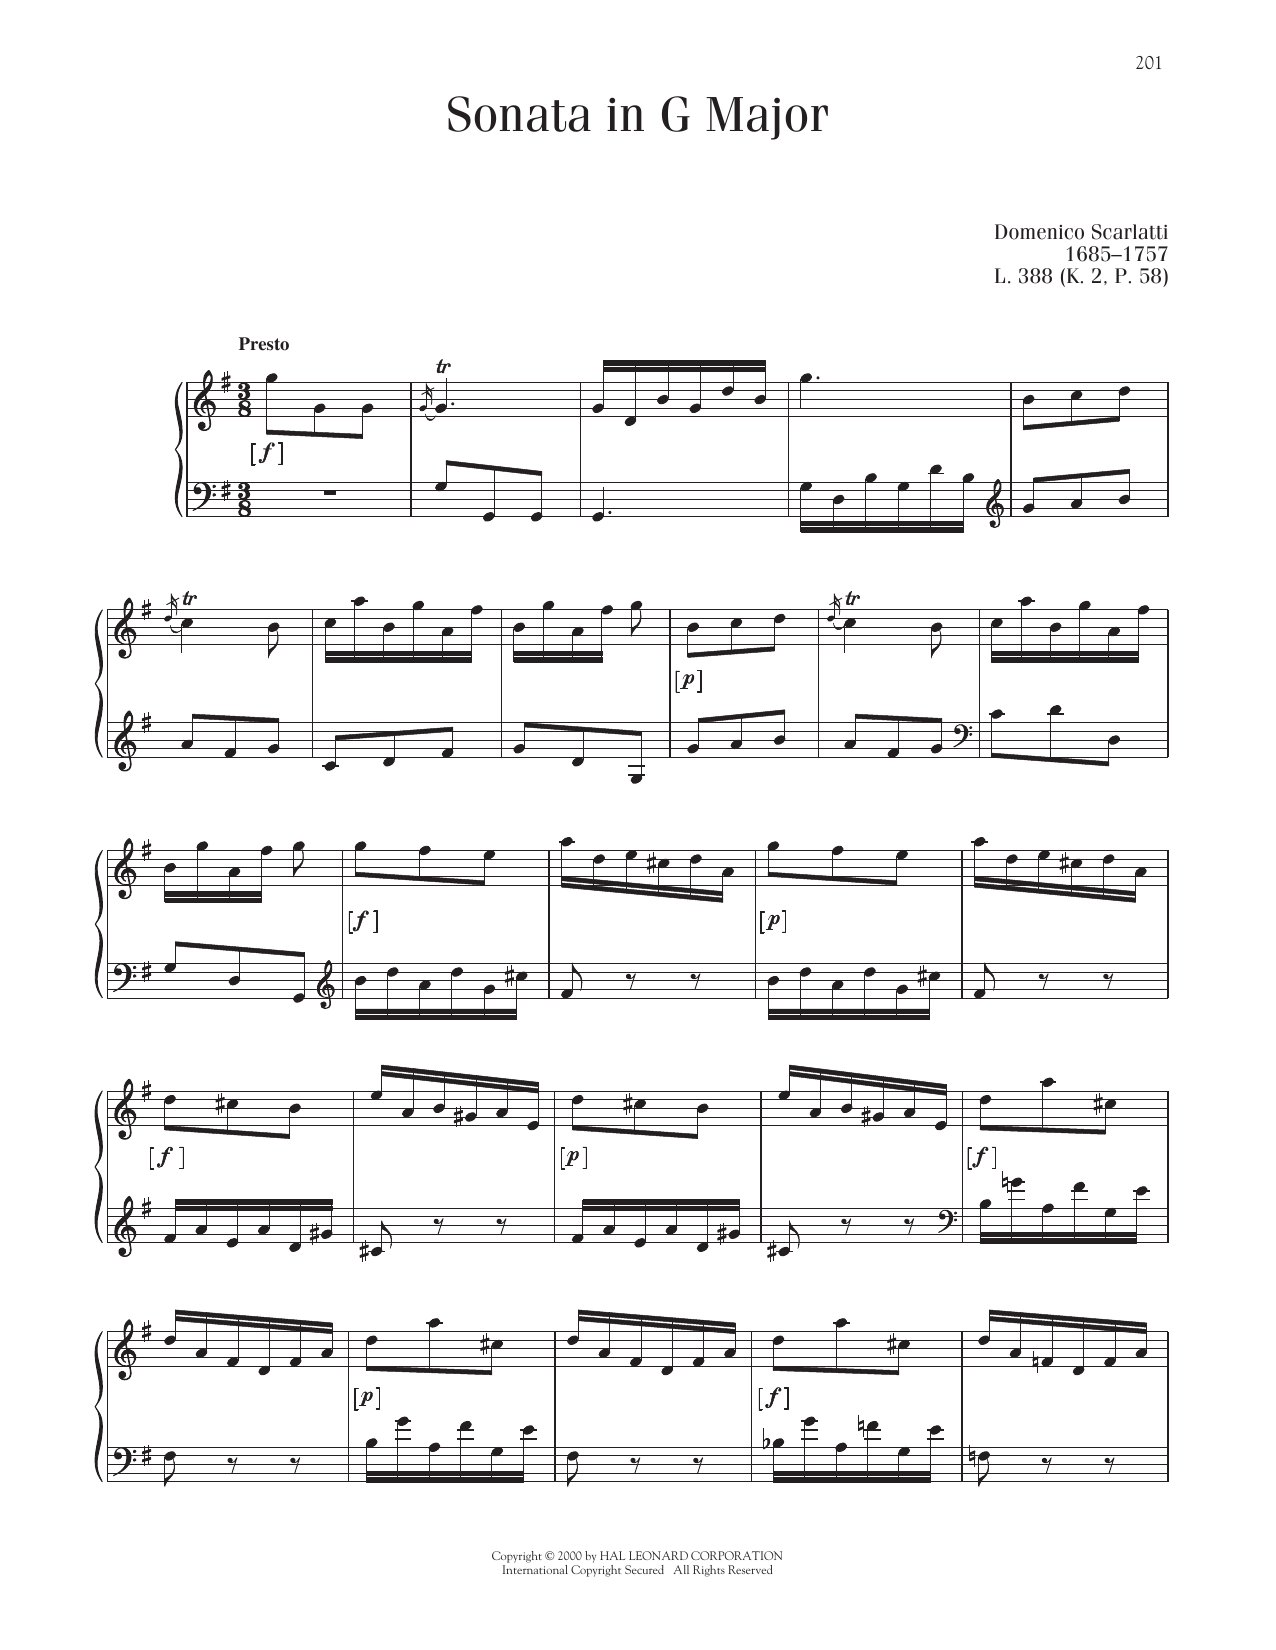 Domenico Scarlatti Sonata In G Major, K. 2 sheet music notes printable PDF score